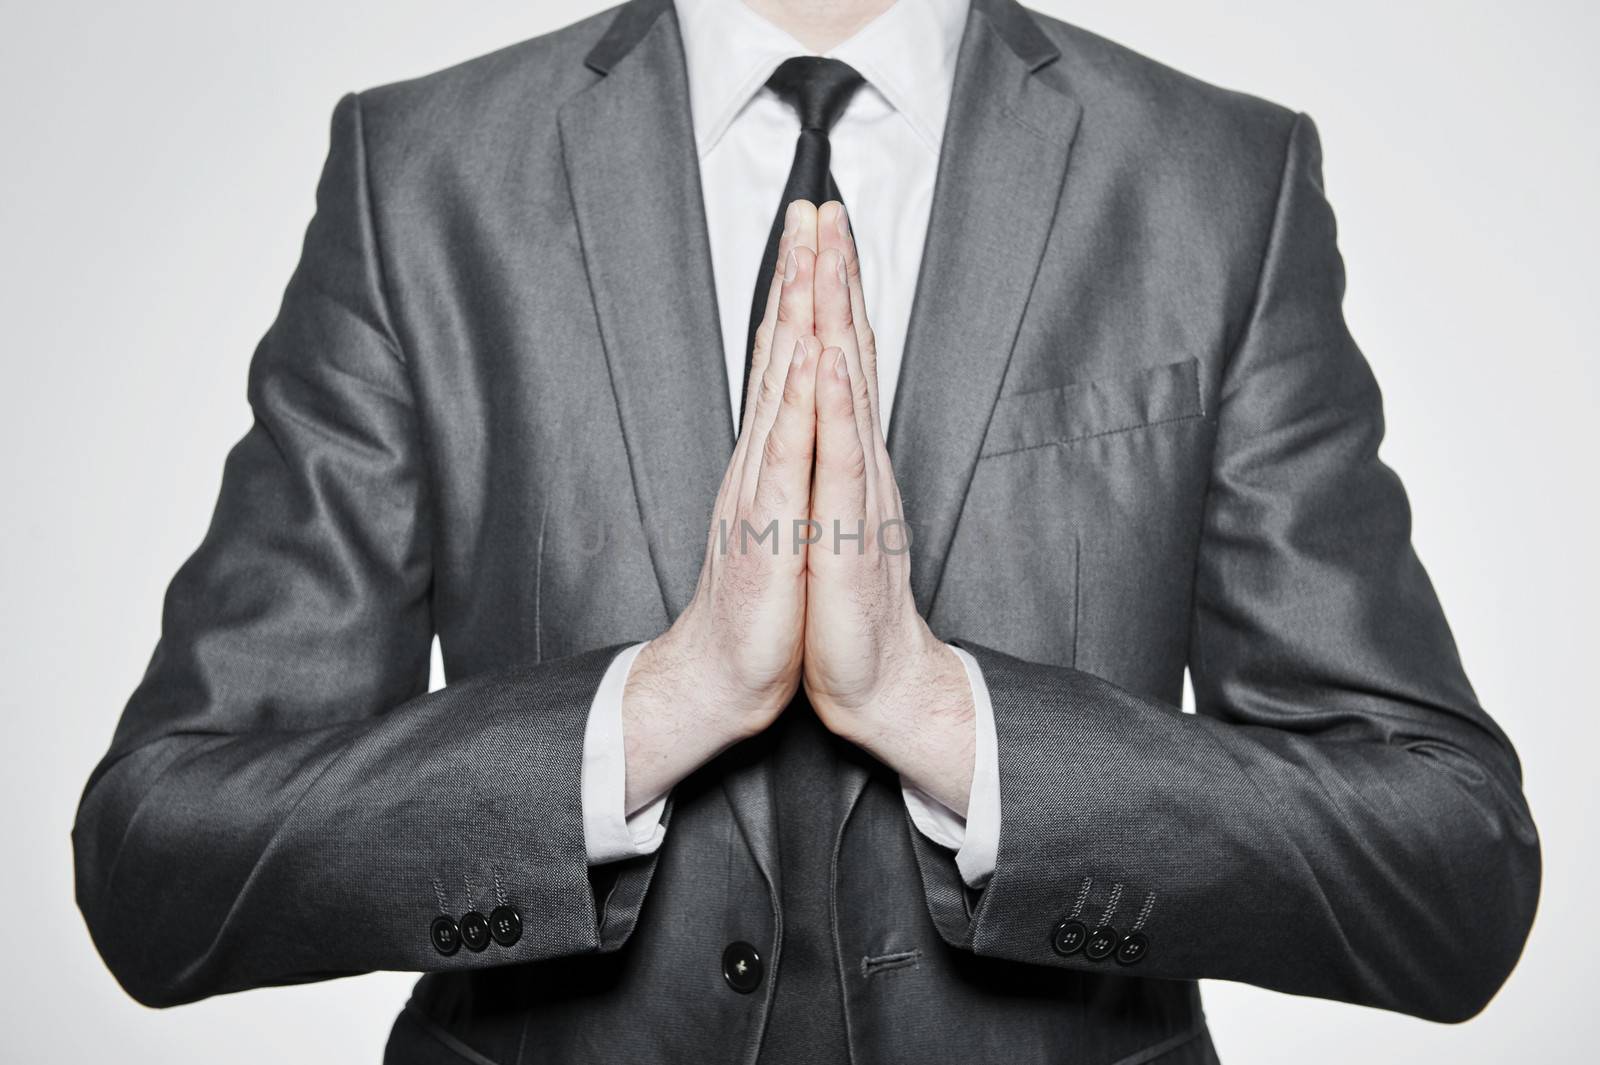  hands of businessman set in pray